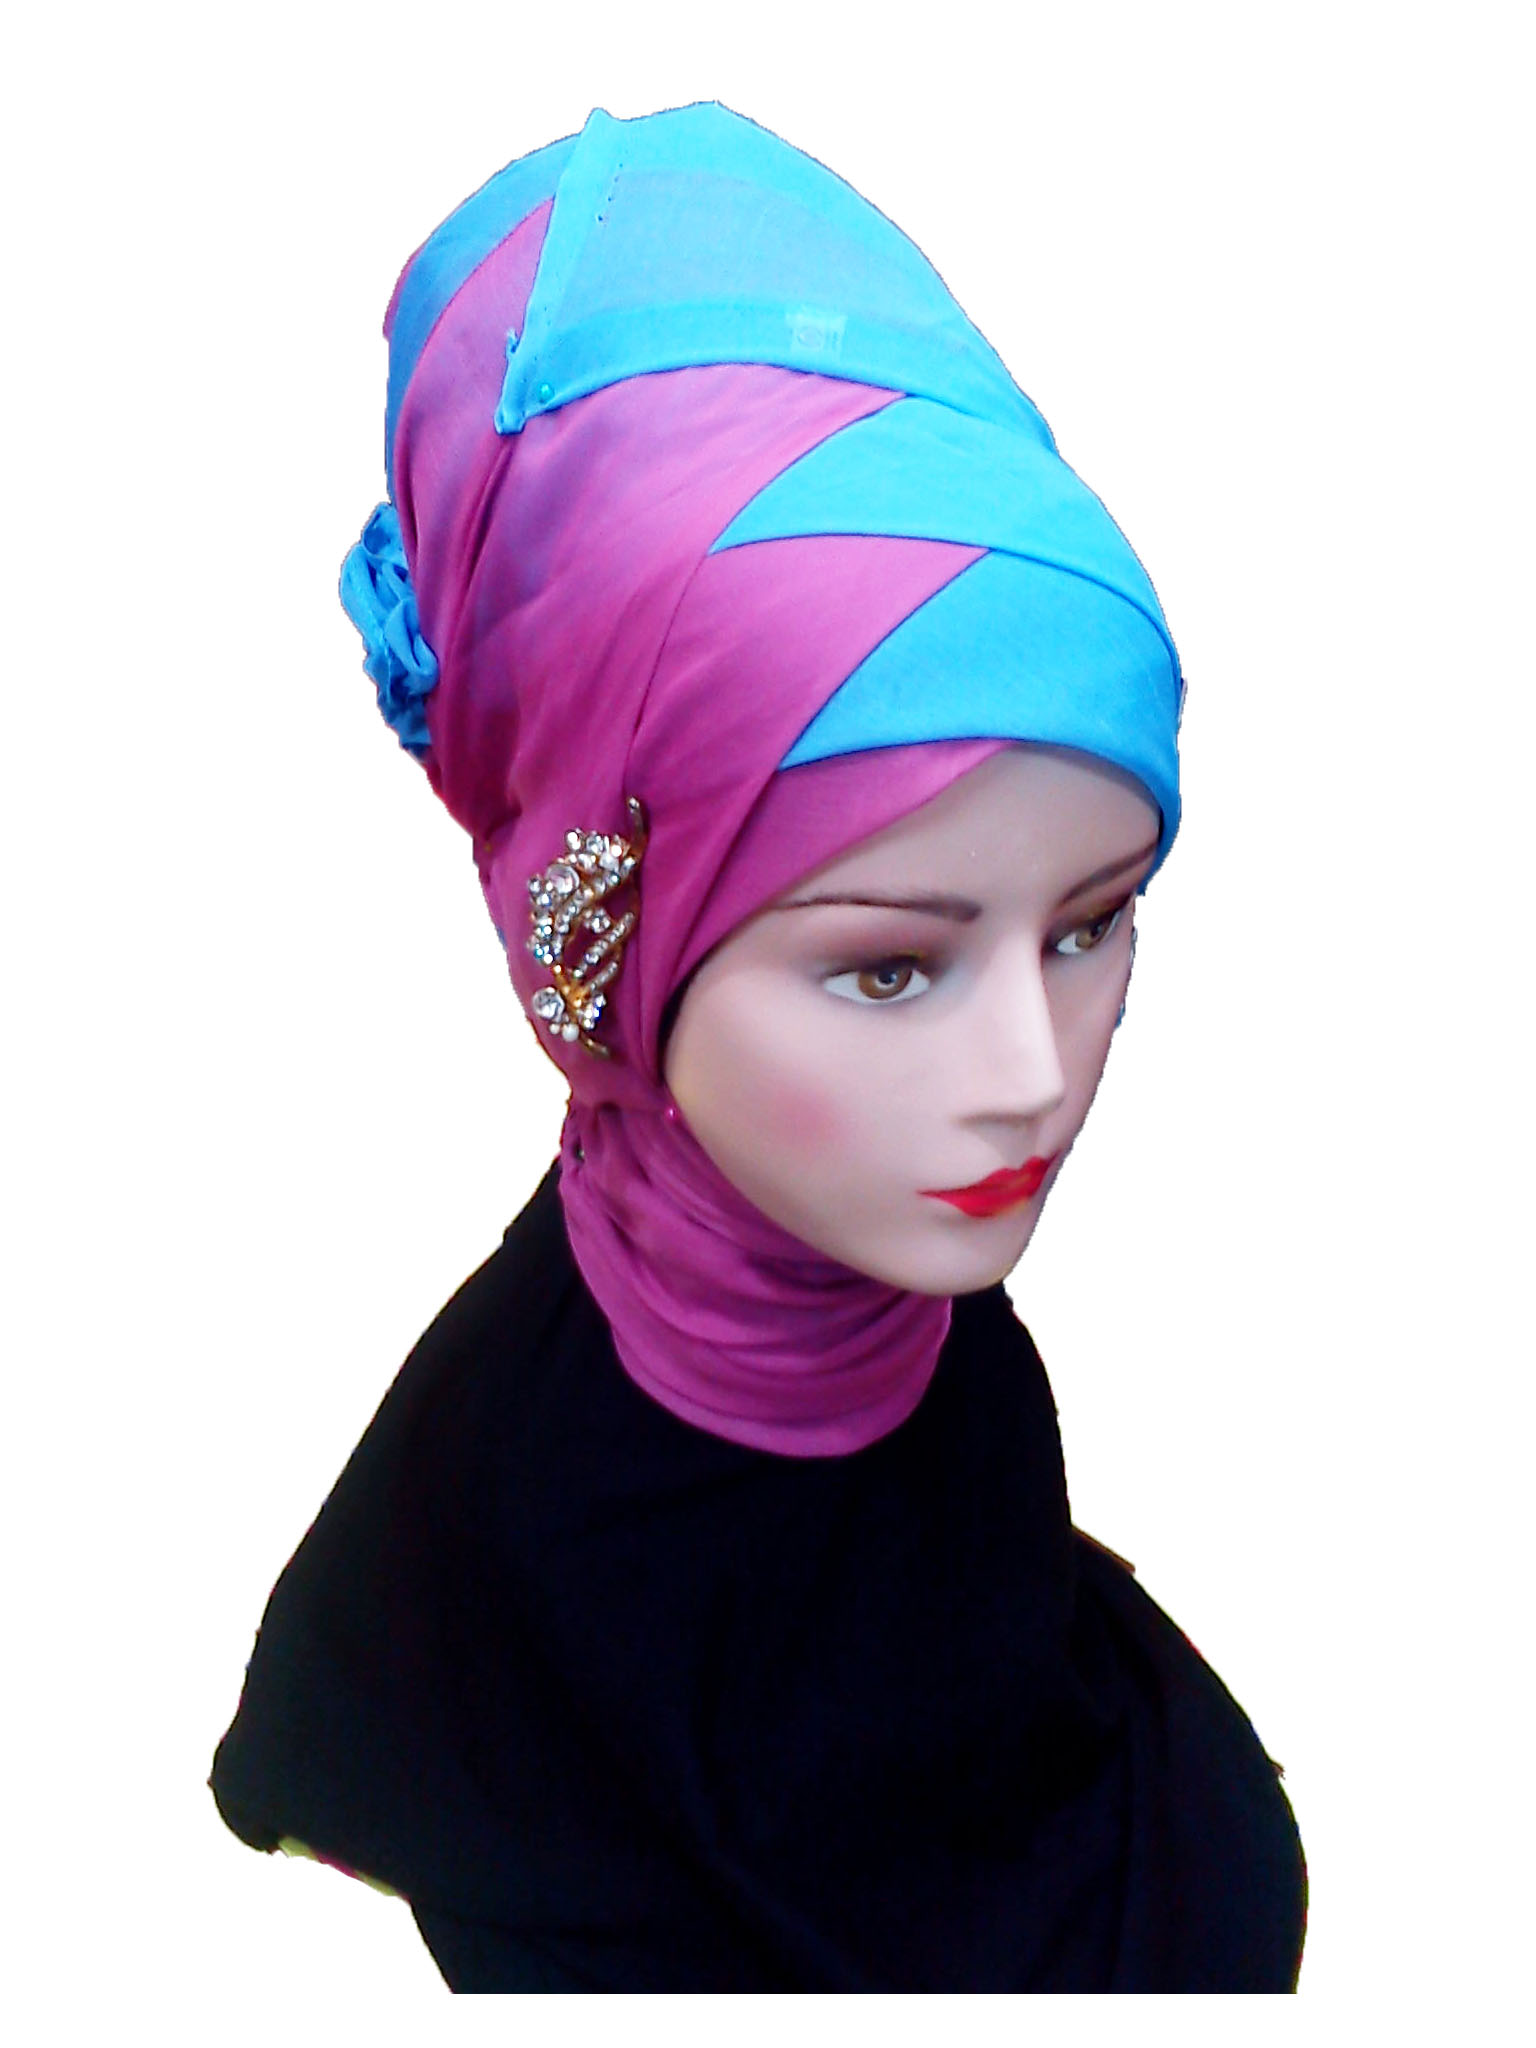 Kreasi Jilbab Anak Untuk Fashion Show